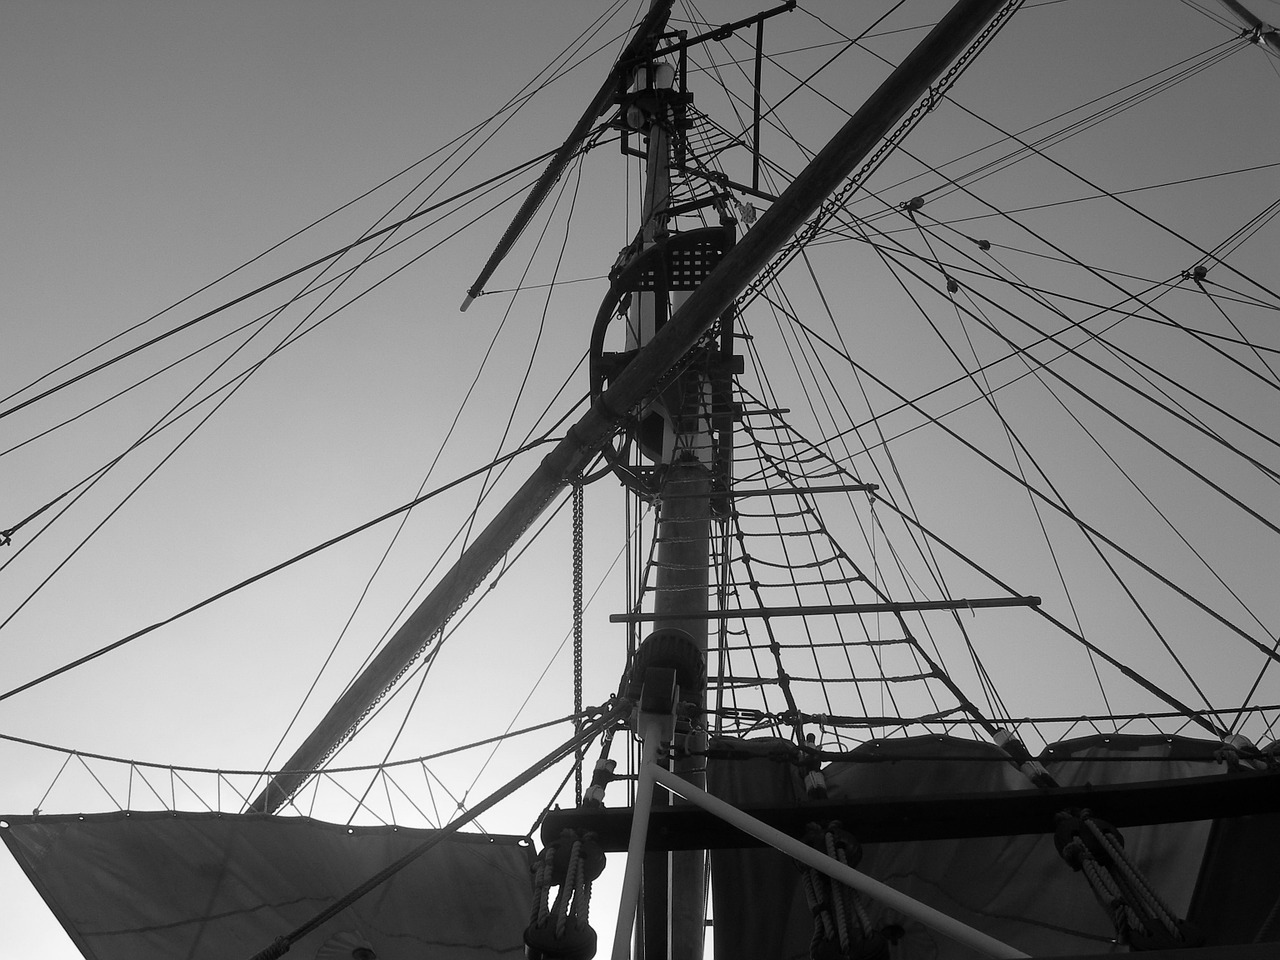 sailboat marseille port free photo